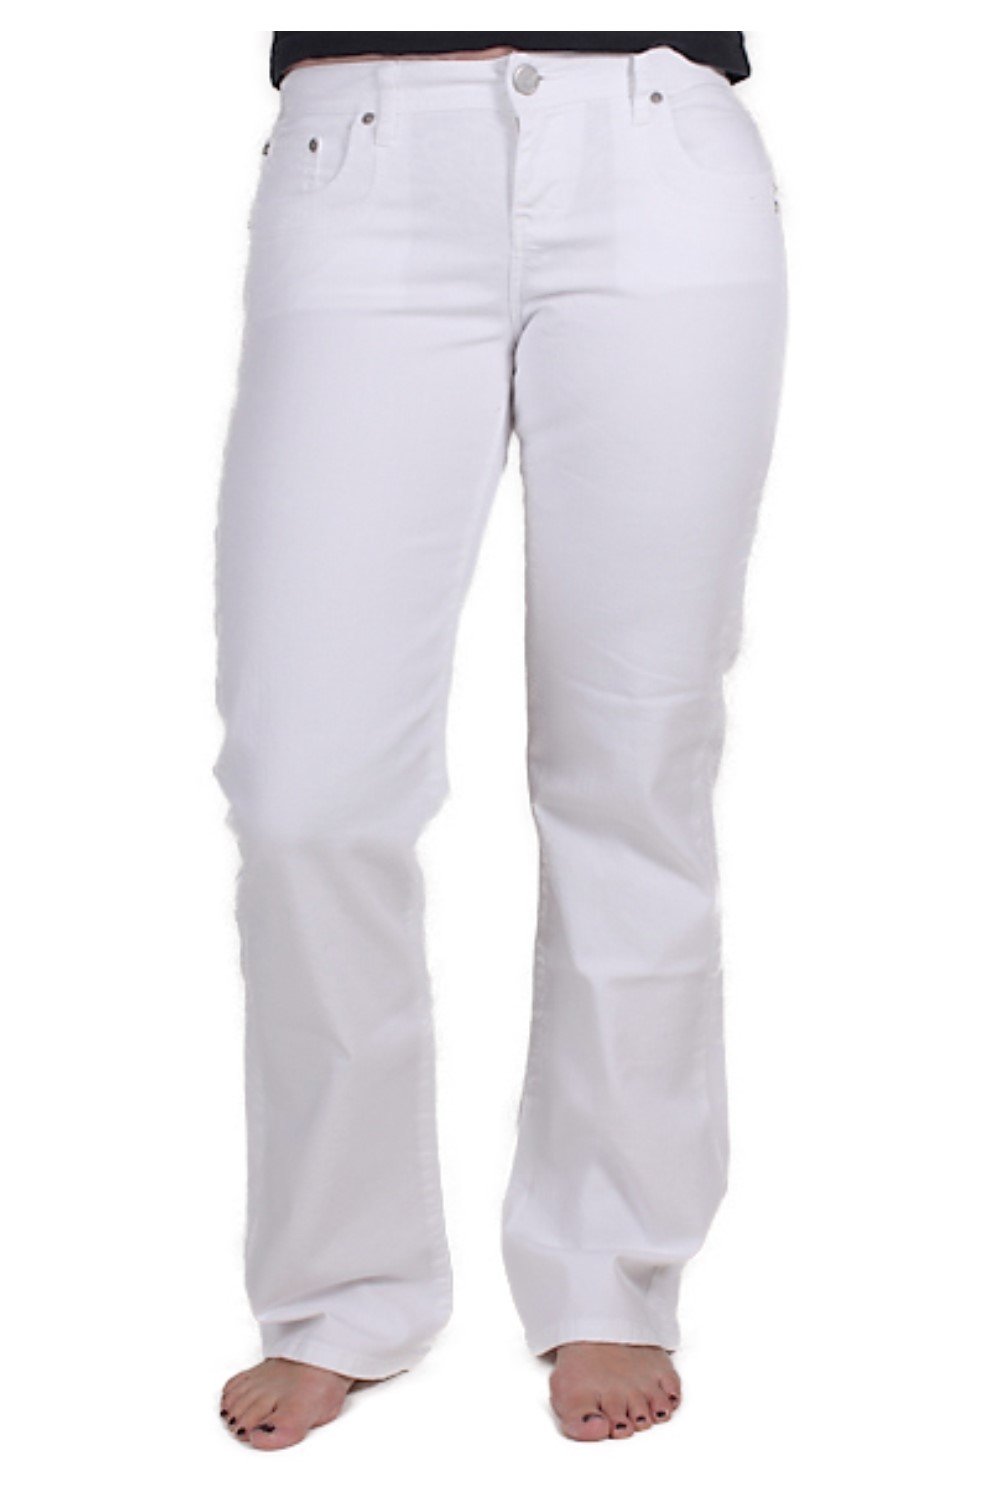 LTB Jeans Damen Valerie Jeans, Weiß (White 100), 31W / 30L